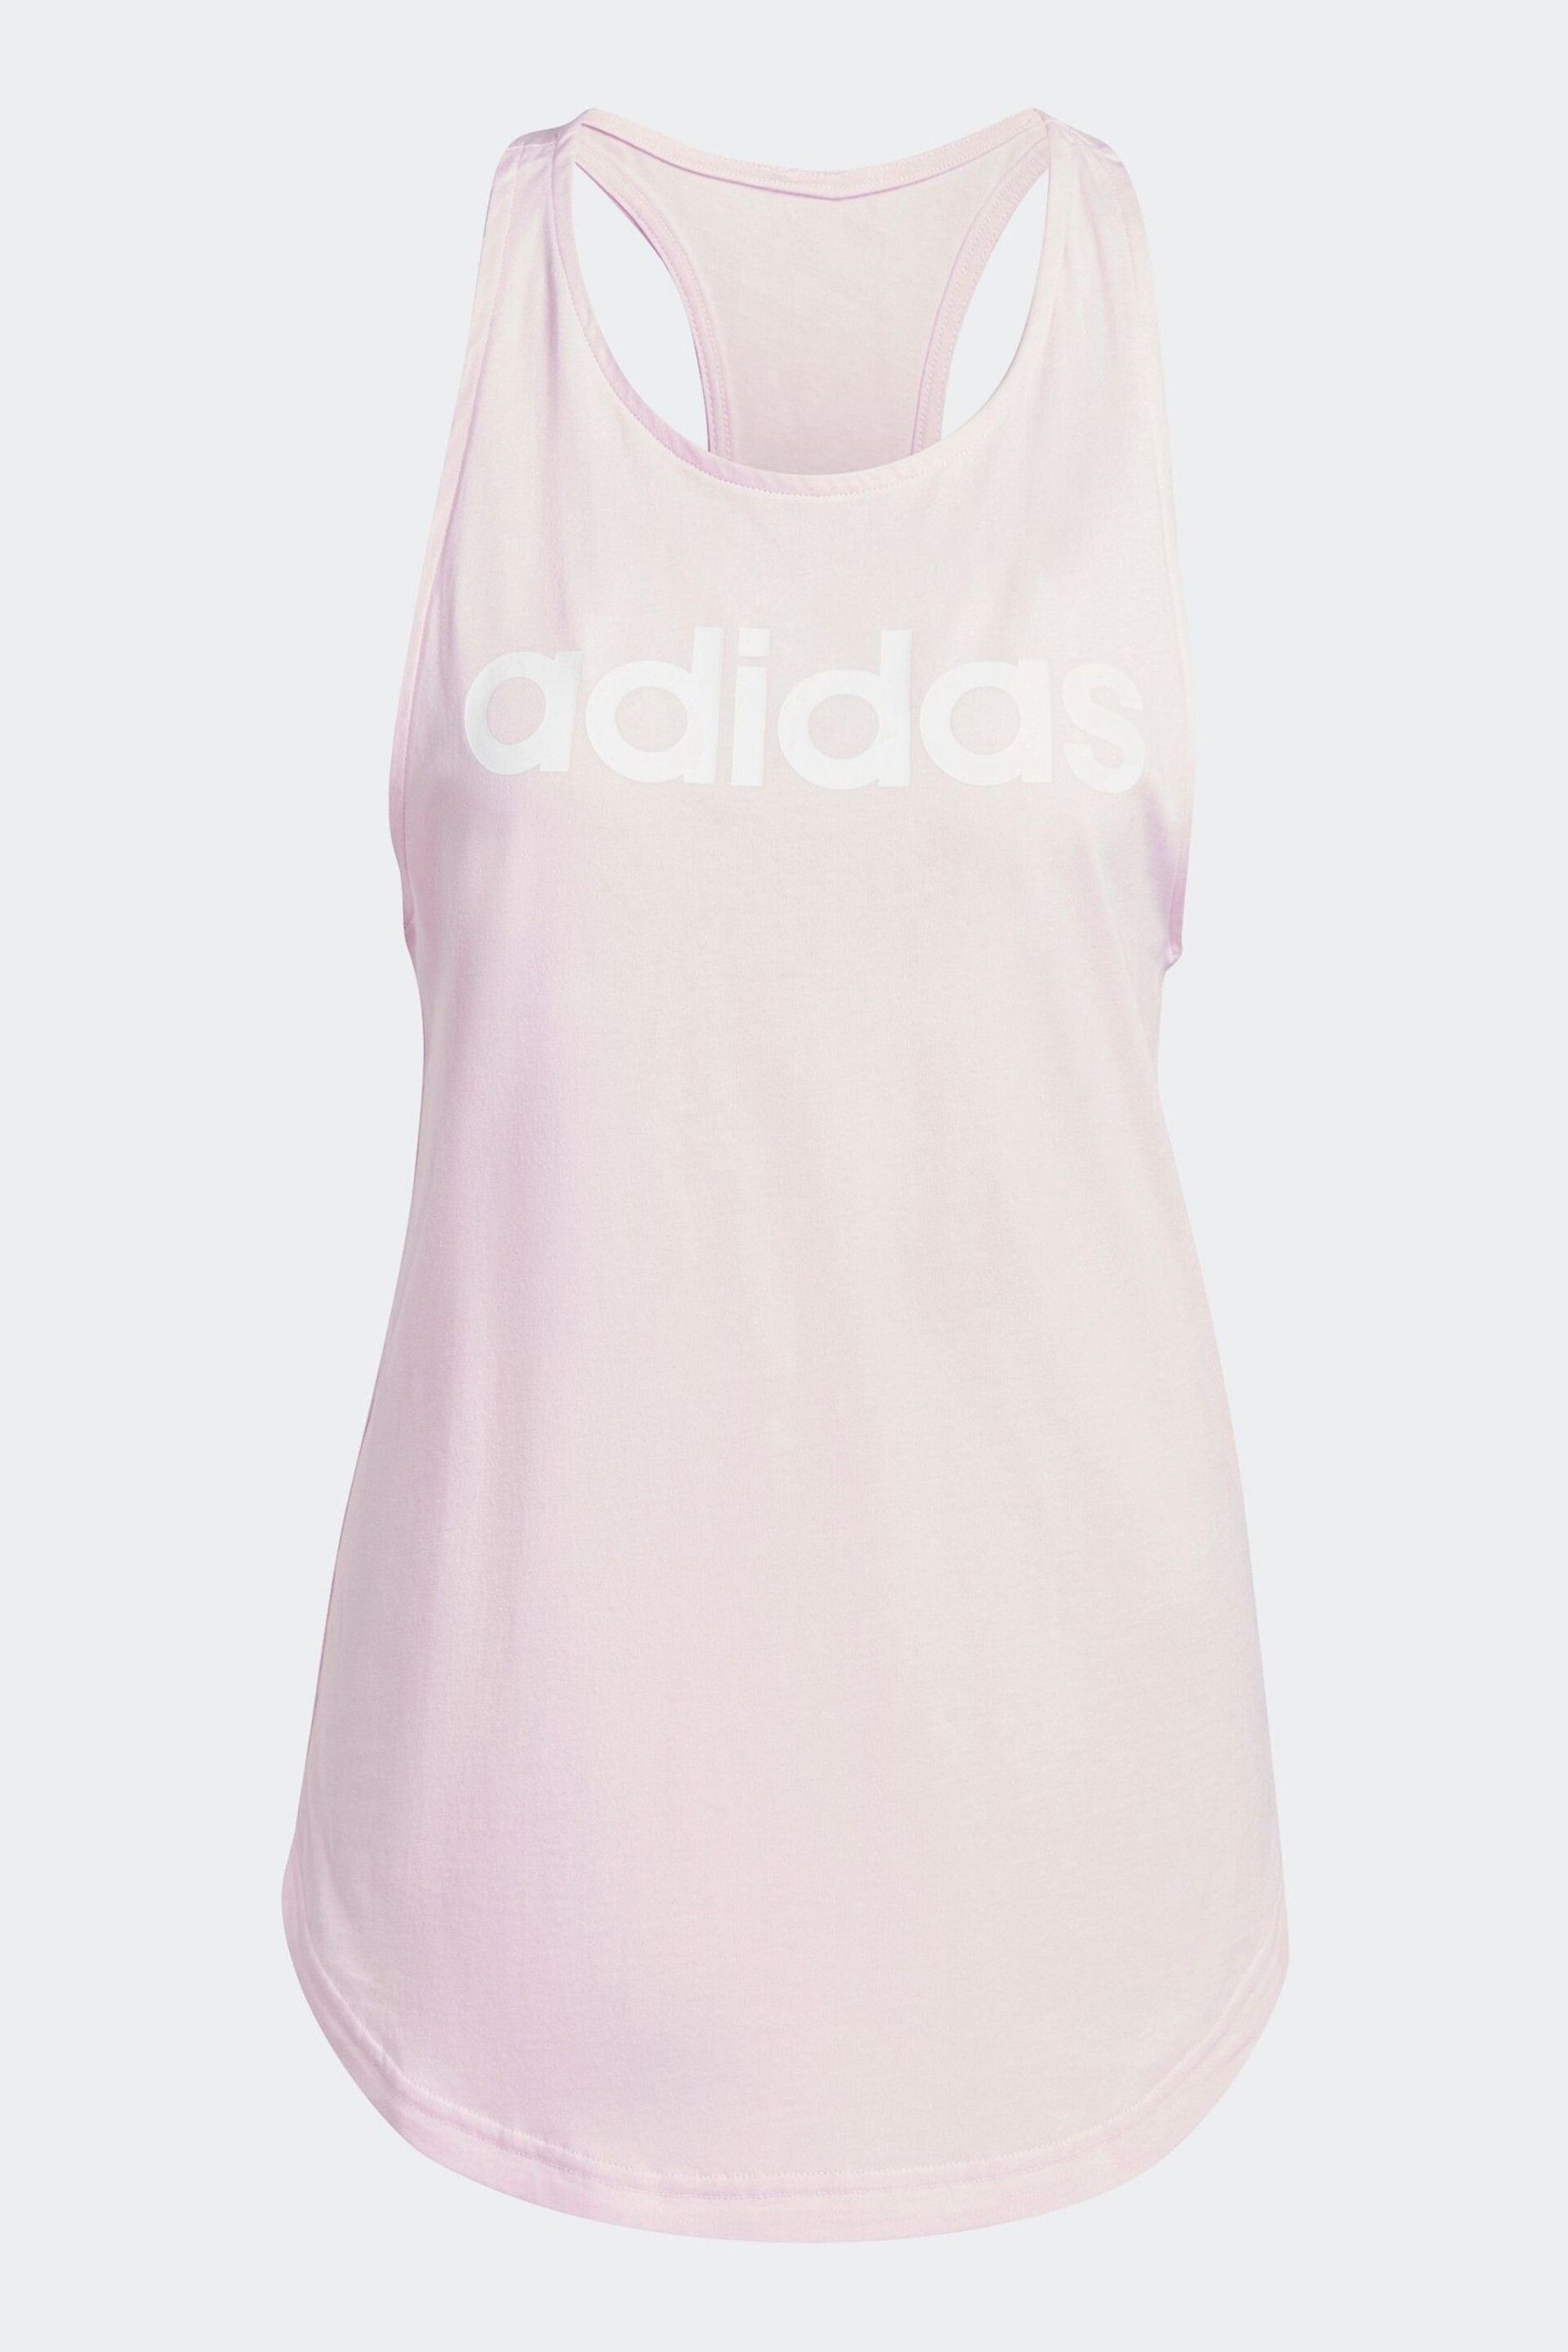 adidas Pink Sportswear Essentials Loose Logo Tank Top - Image 5 of 5